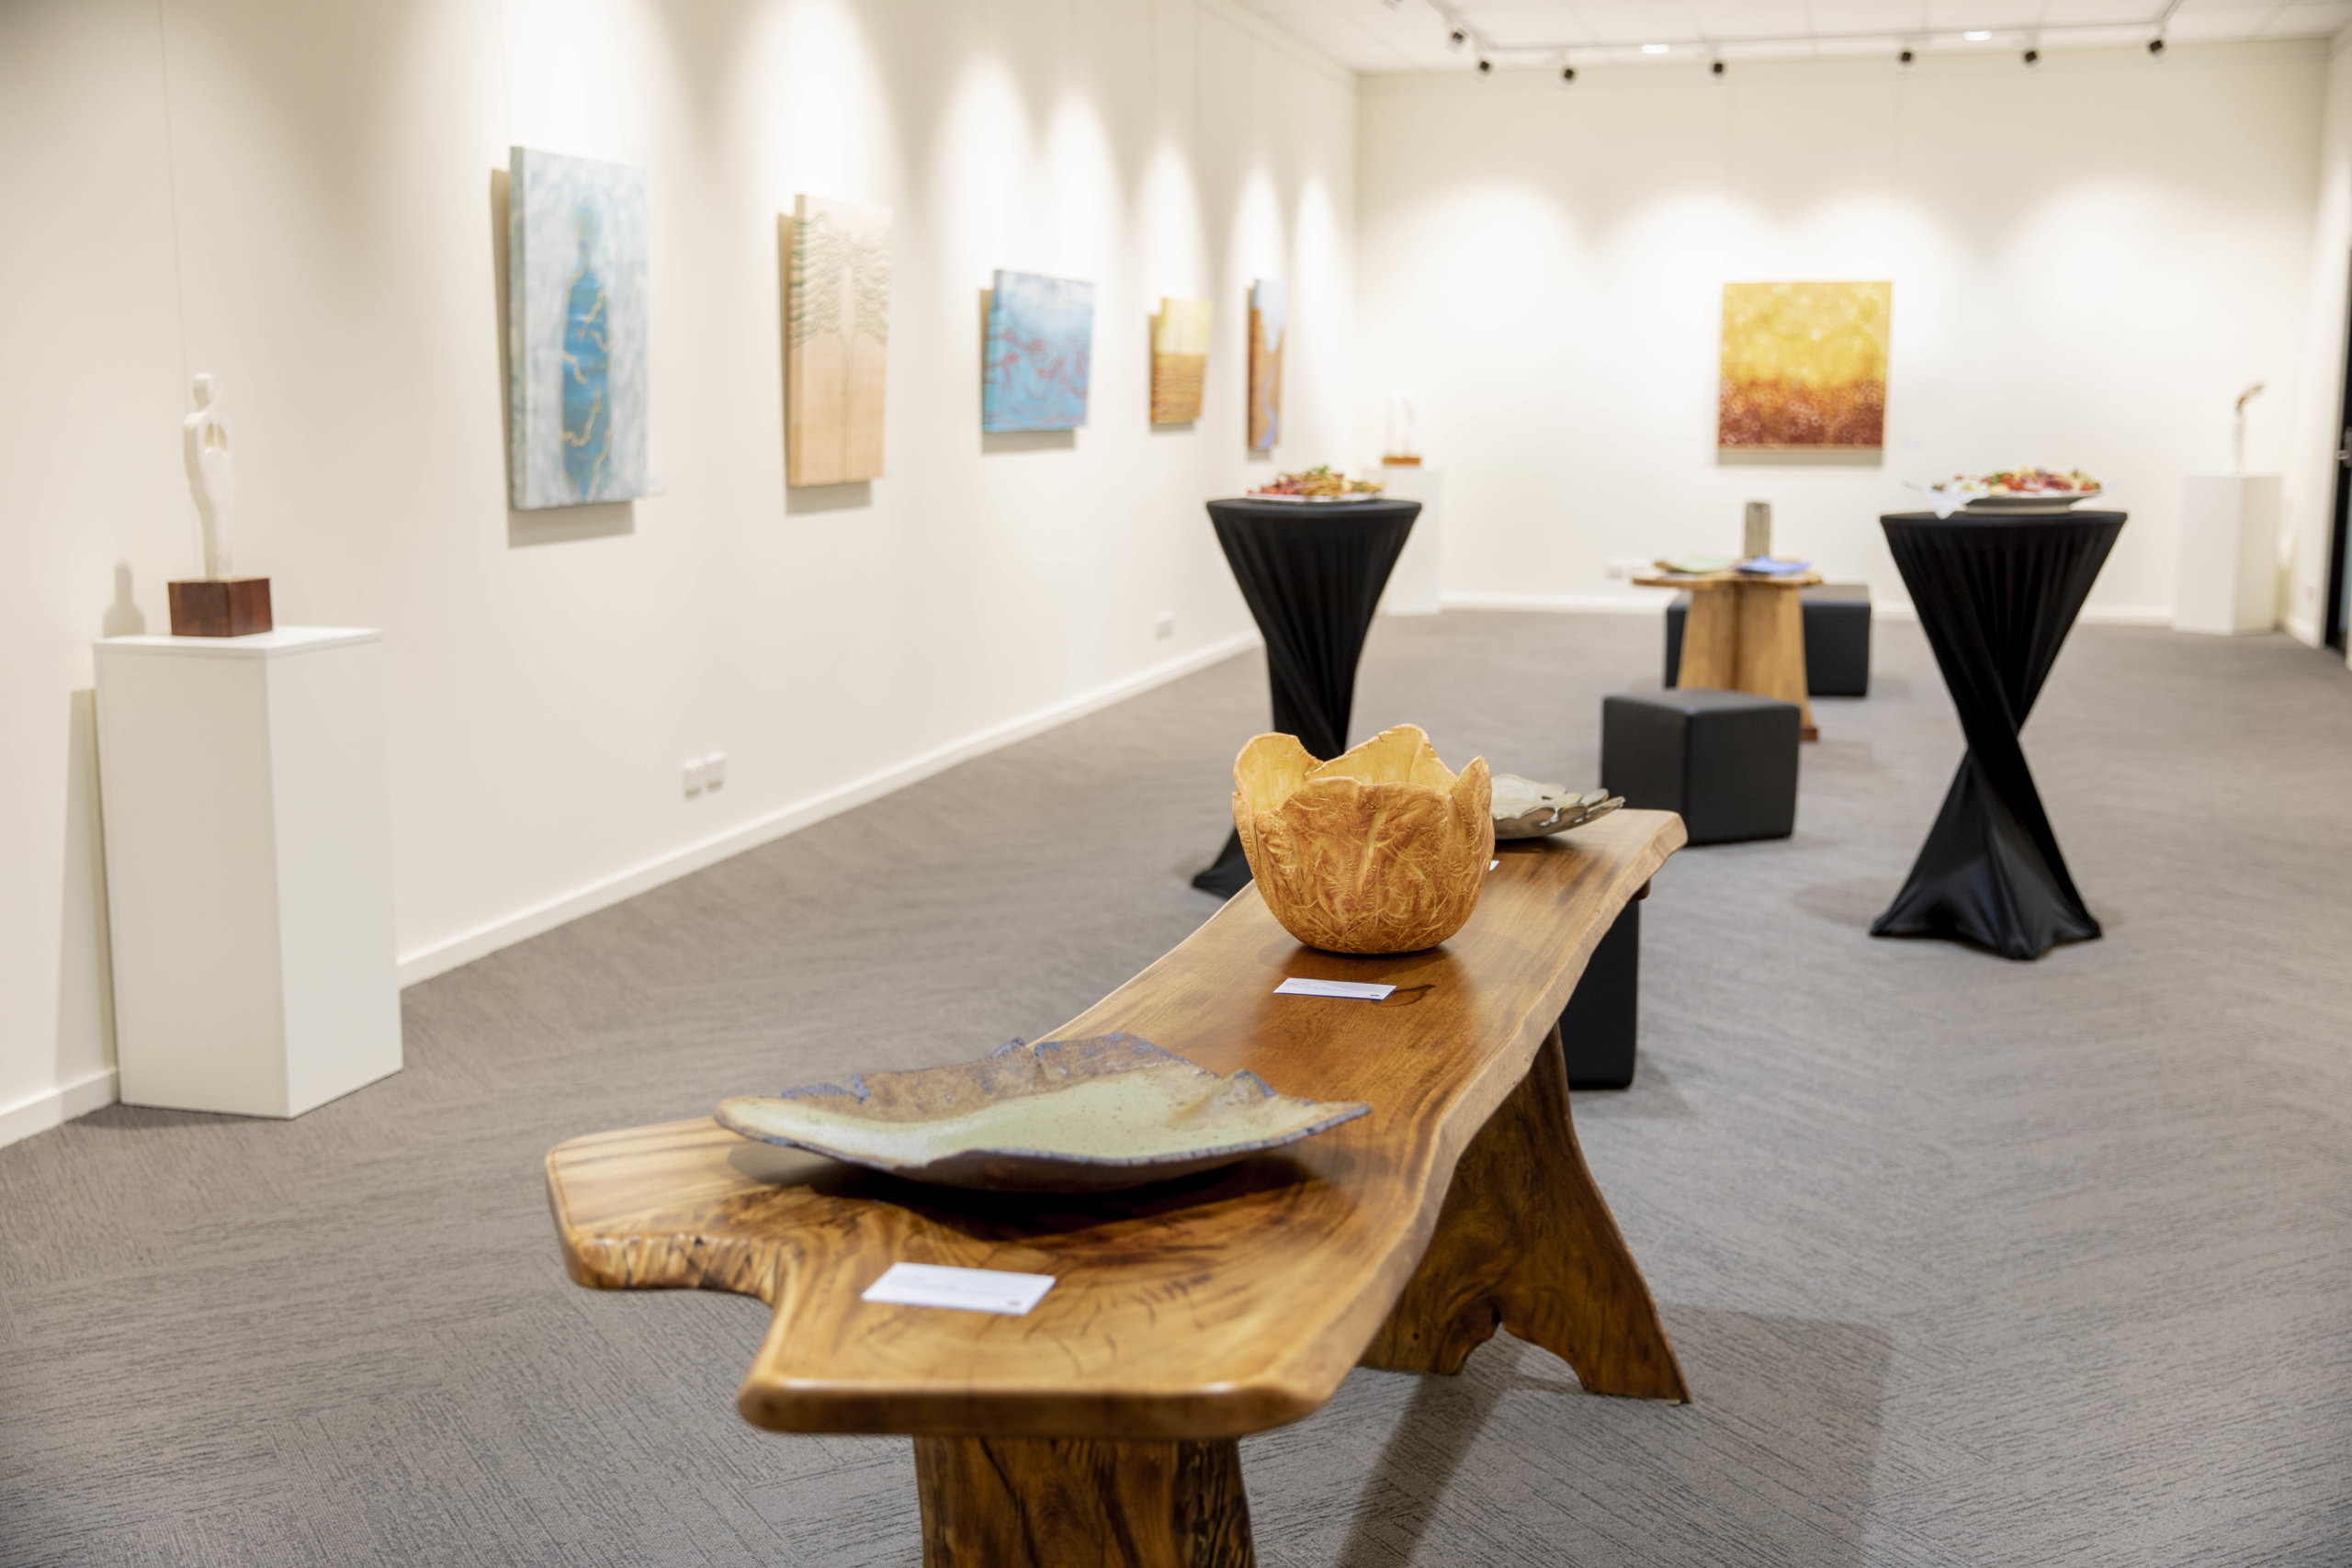 Exhibition at Mount Isa Regional Art Gallery